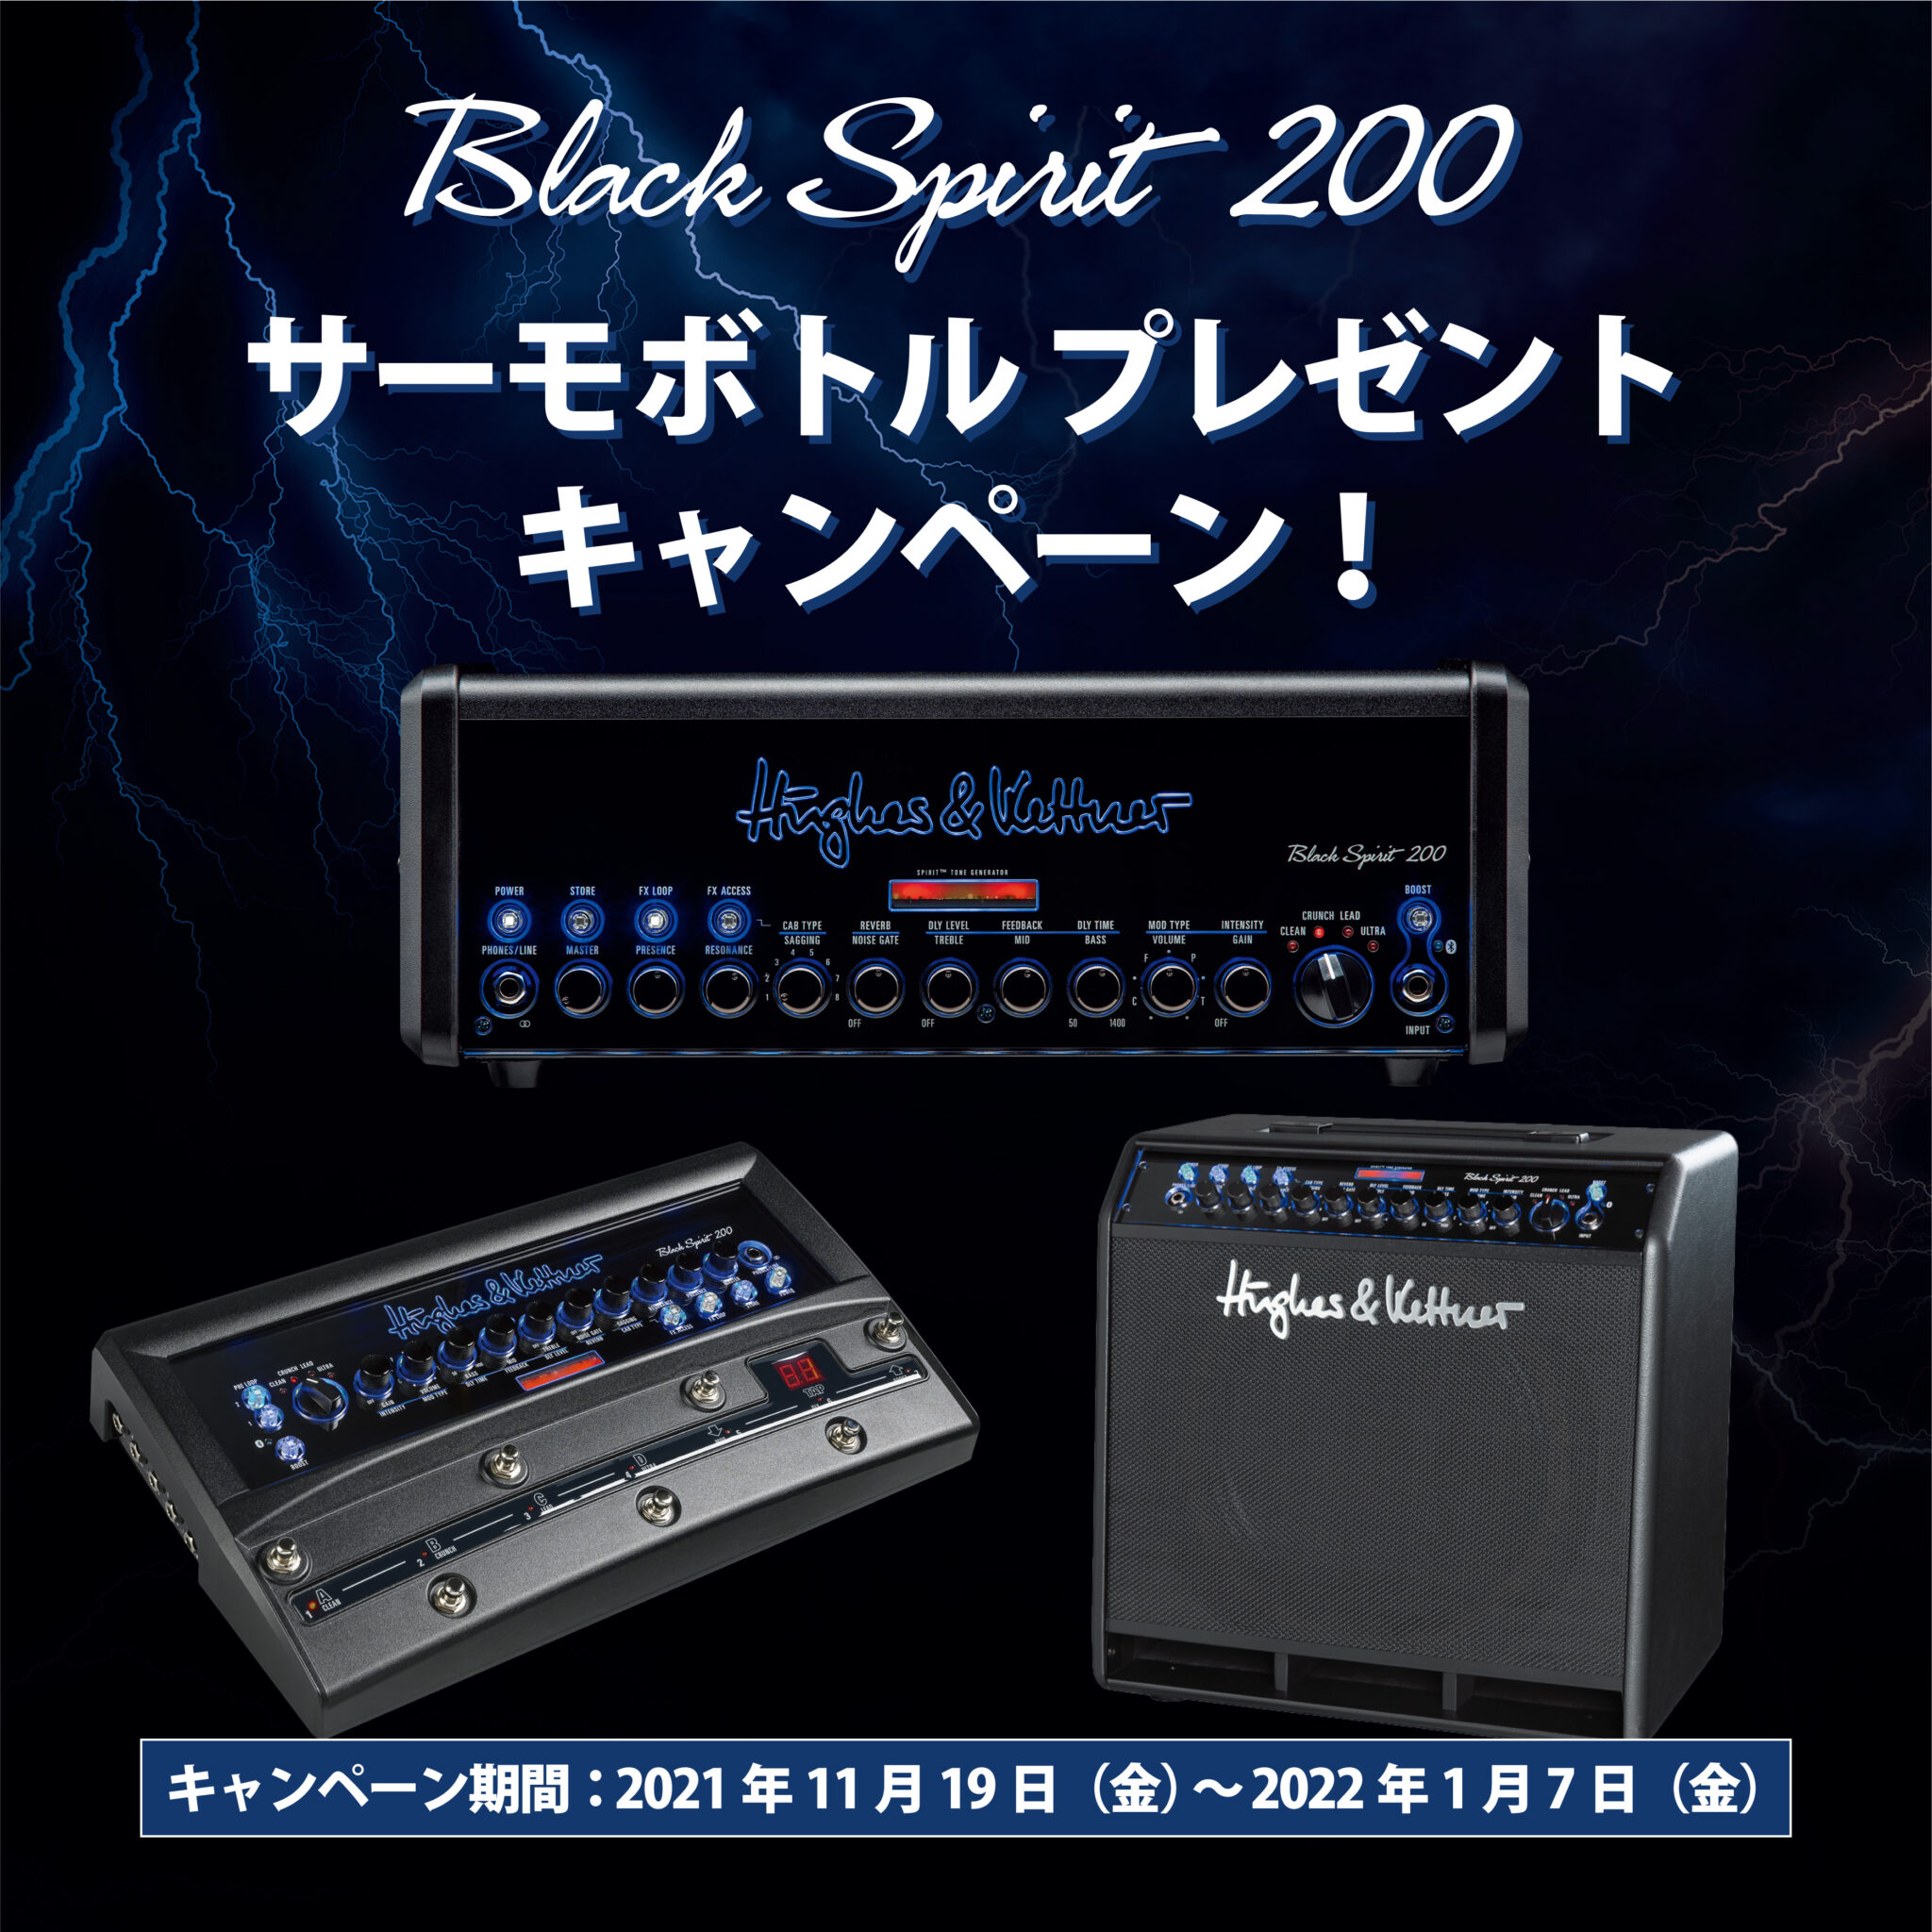 Hughes&Kettner Black Spirit 200 箱無し値引きあり+stbp.com.br